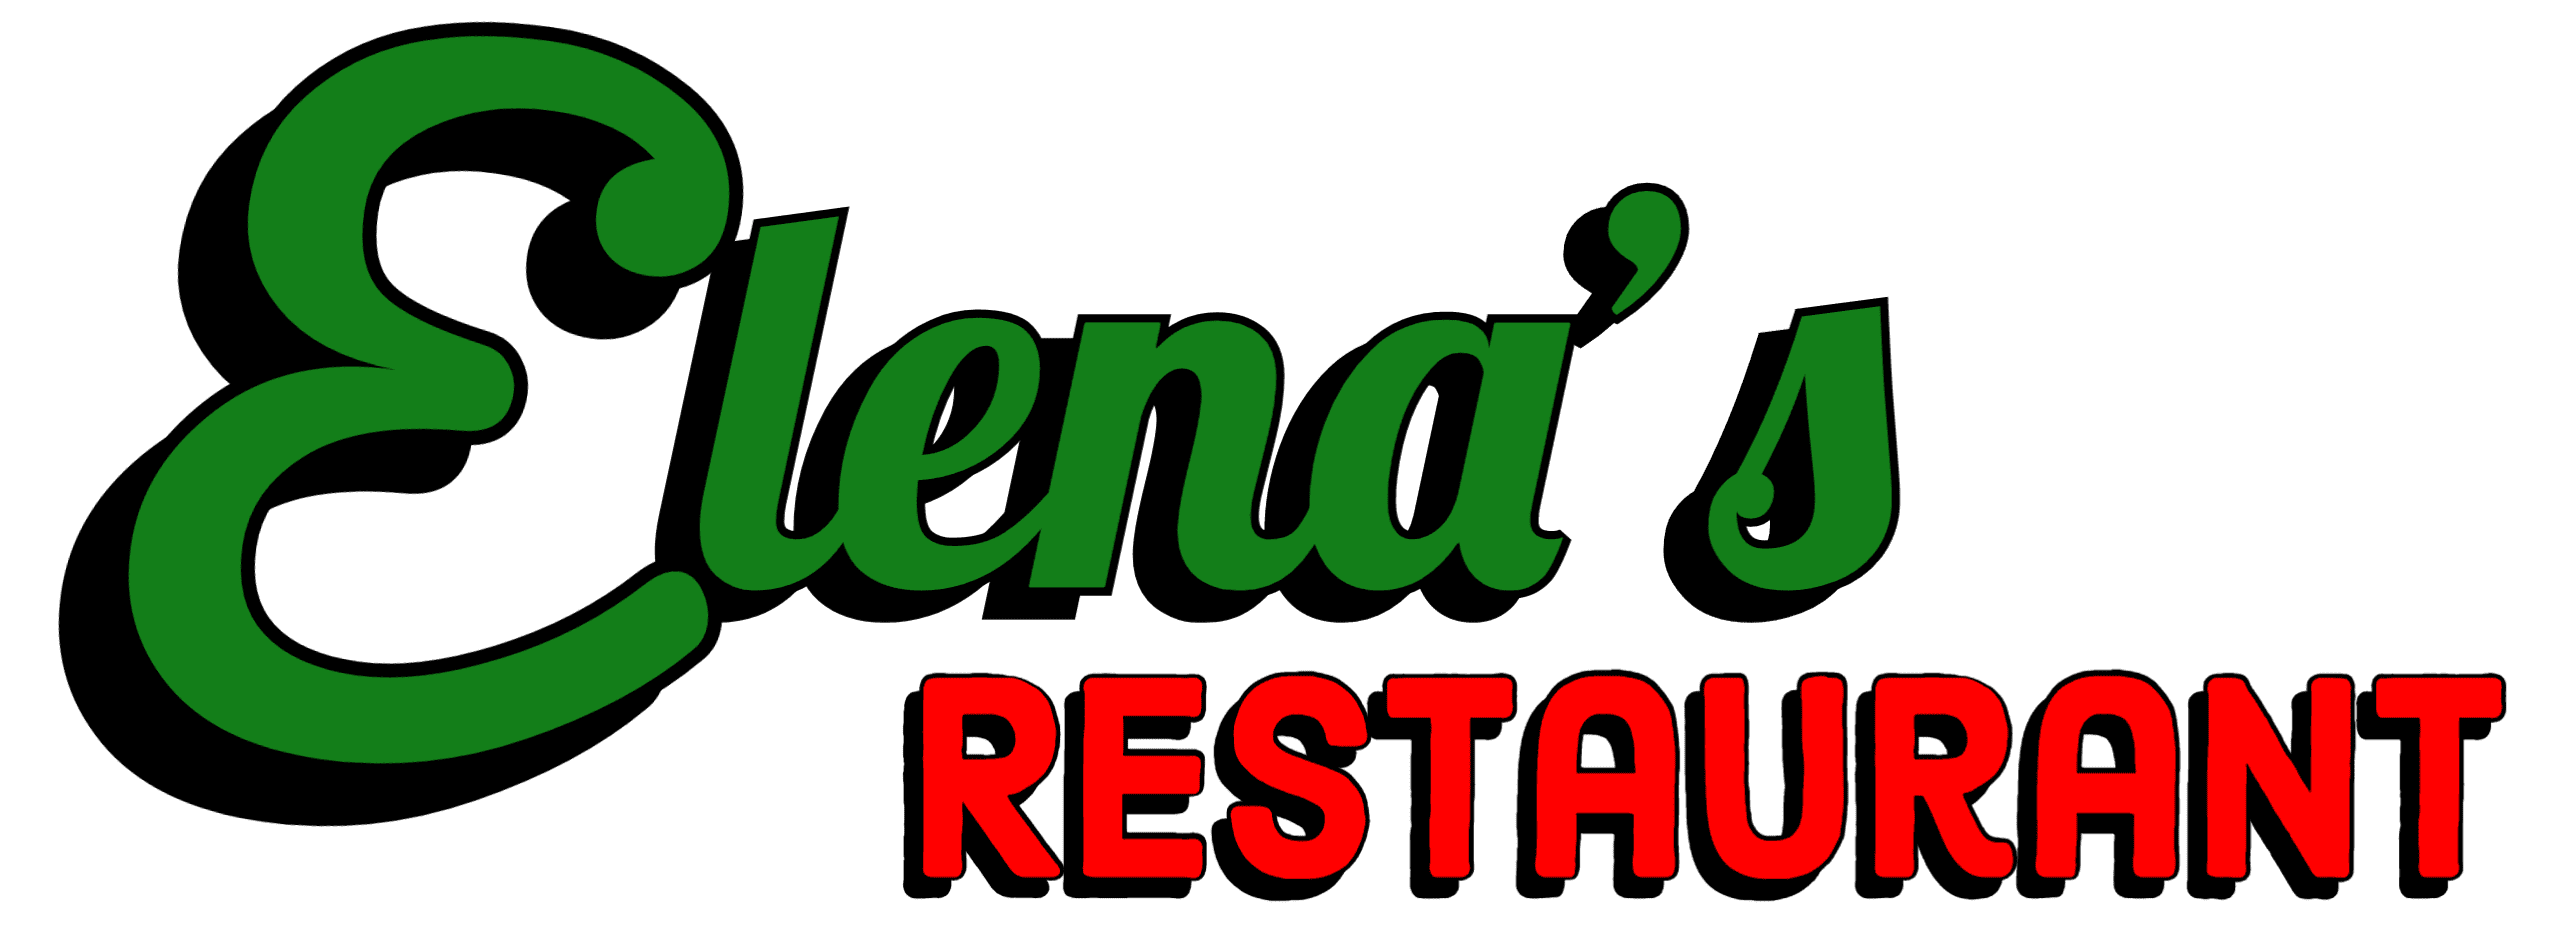 Elena's Restaurant is a Breakfast Lunch and Dinner Restaurant in Punta Gorda Florida